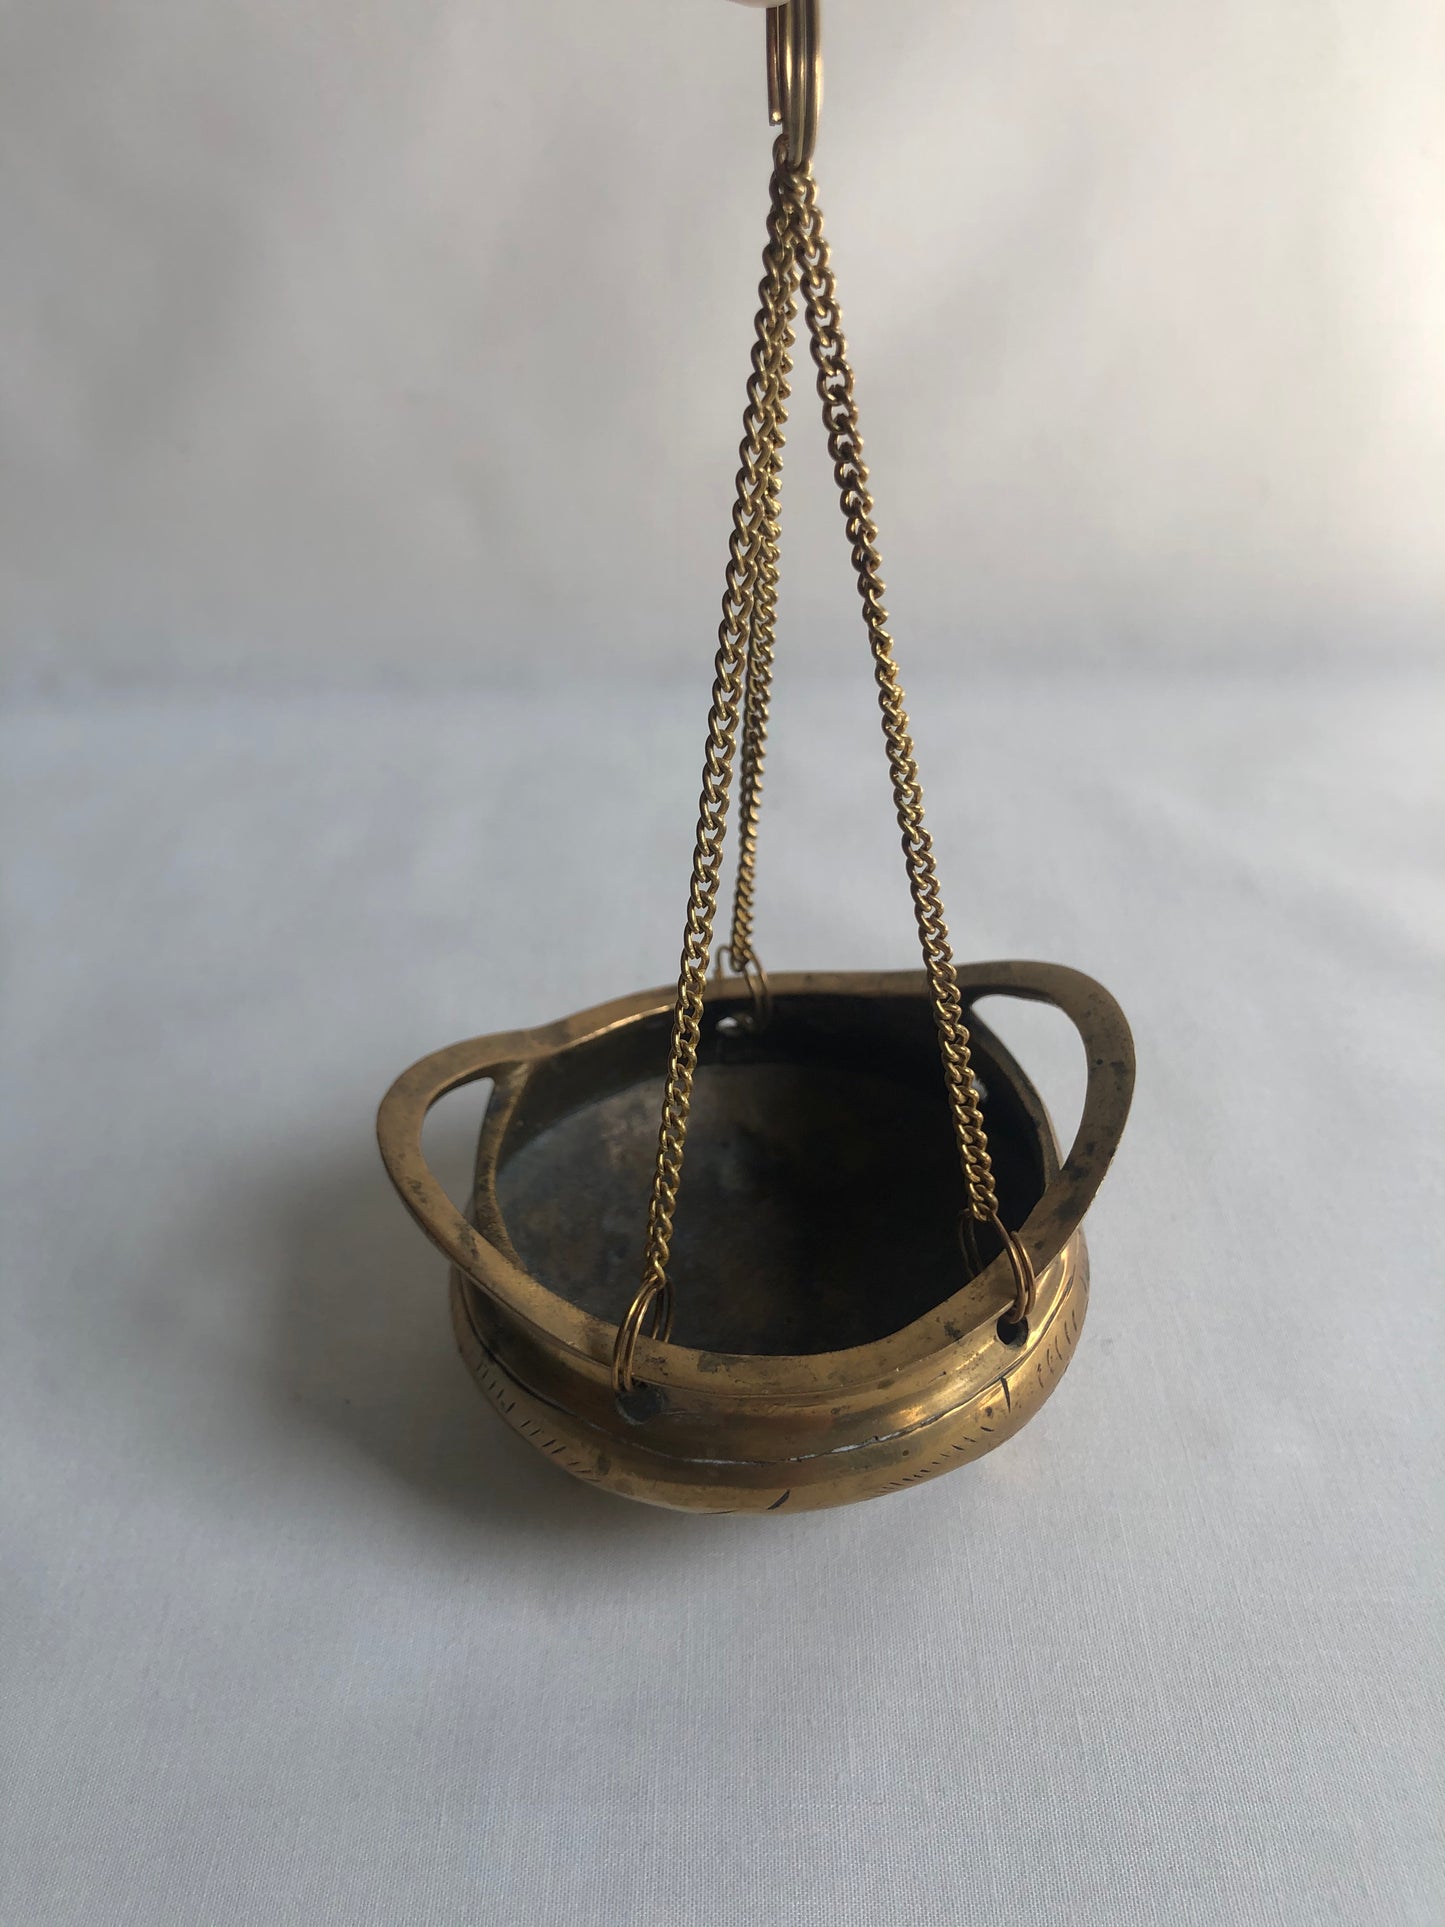 Brass Incense Bowl